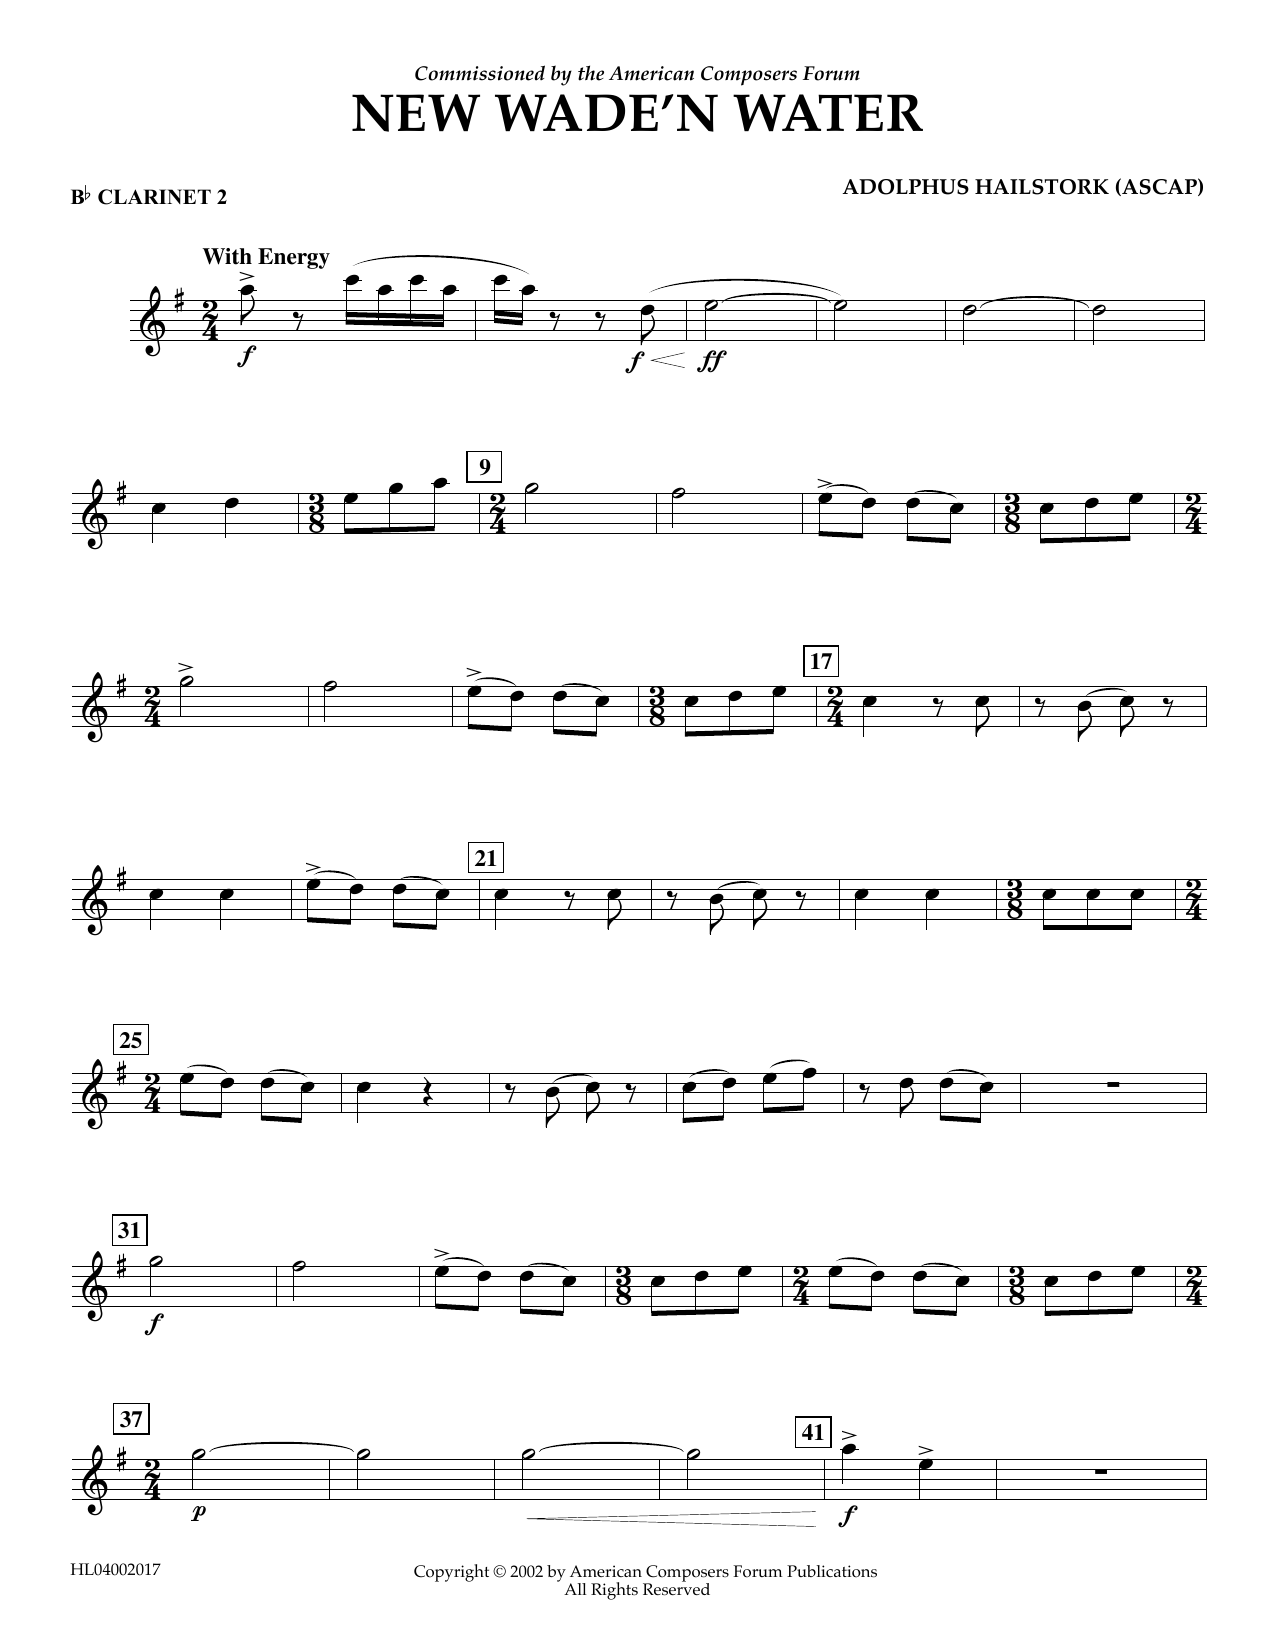 Download Adolphus Hailstork New Wade 'n Water - Bb Clarinet 2 Sheet Music